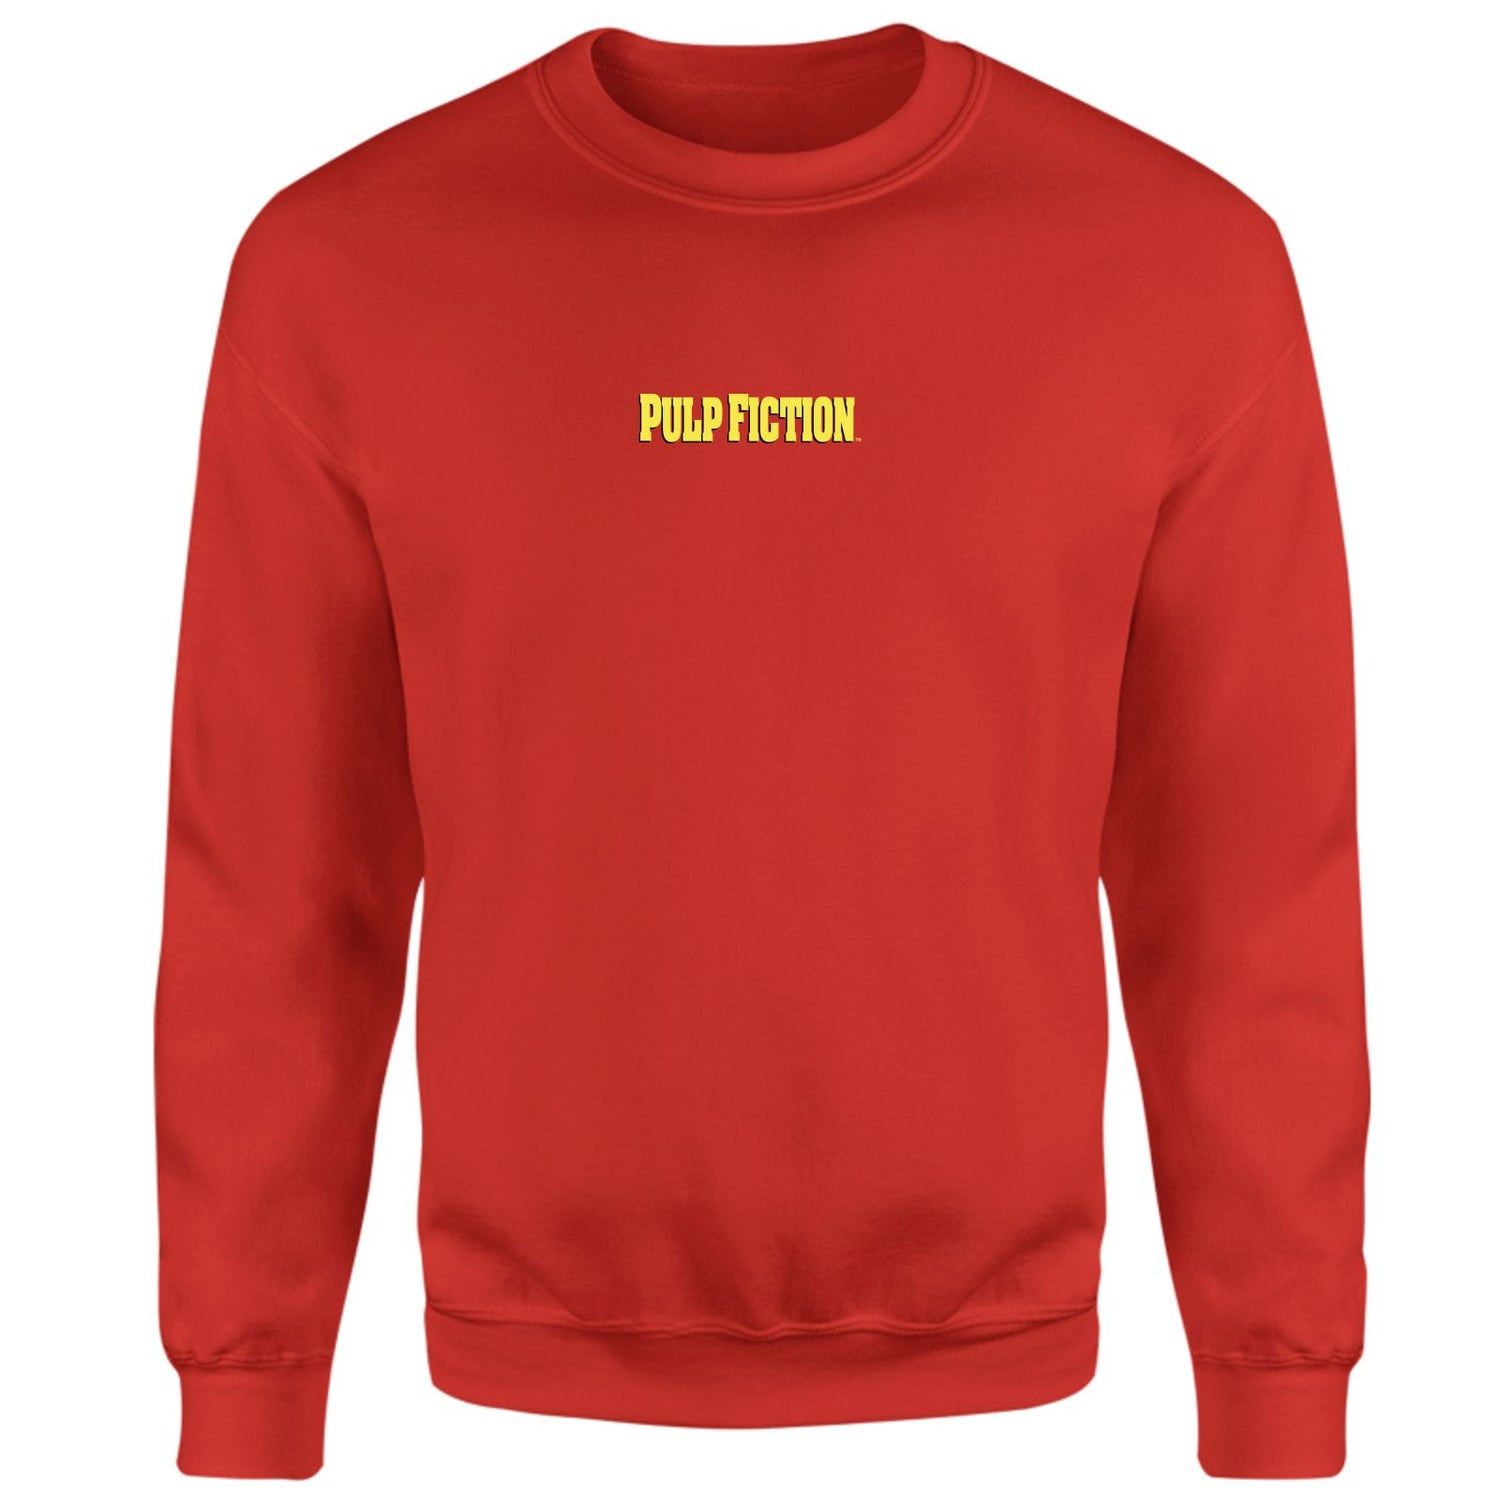 Pulp Fiction Now I Wanna Dance Sweatshirt - Red - XL - Red